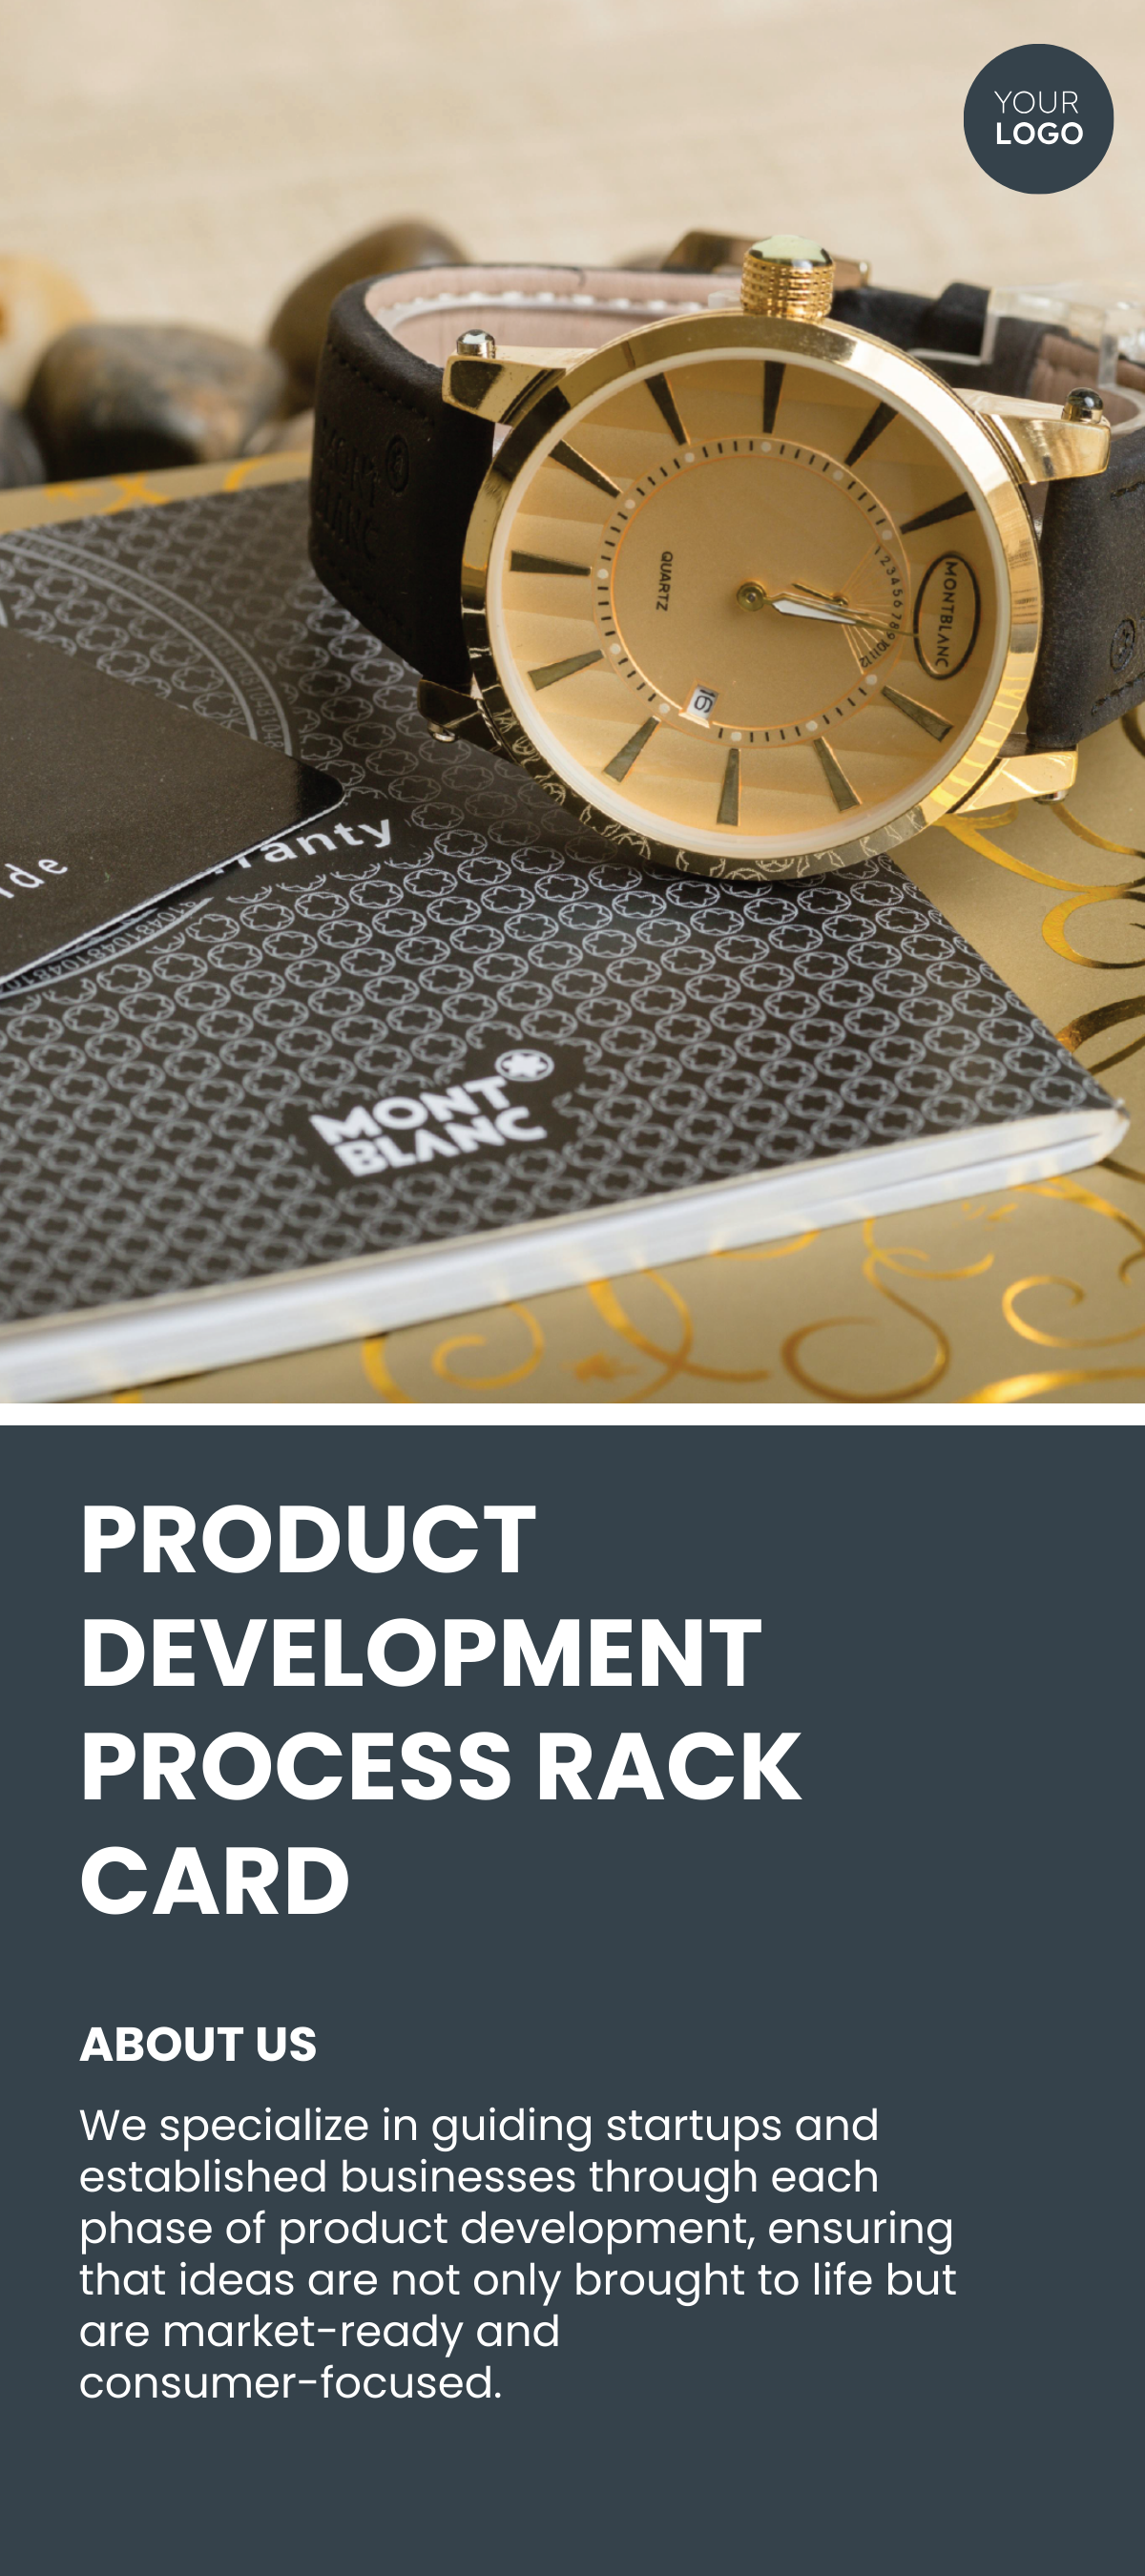 Product Development Process Rack Card Template